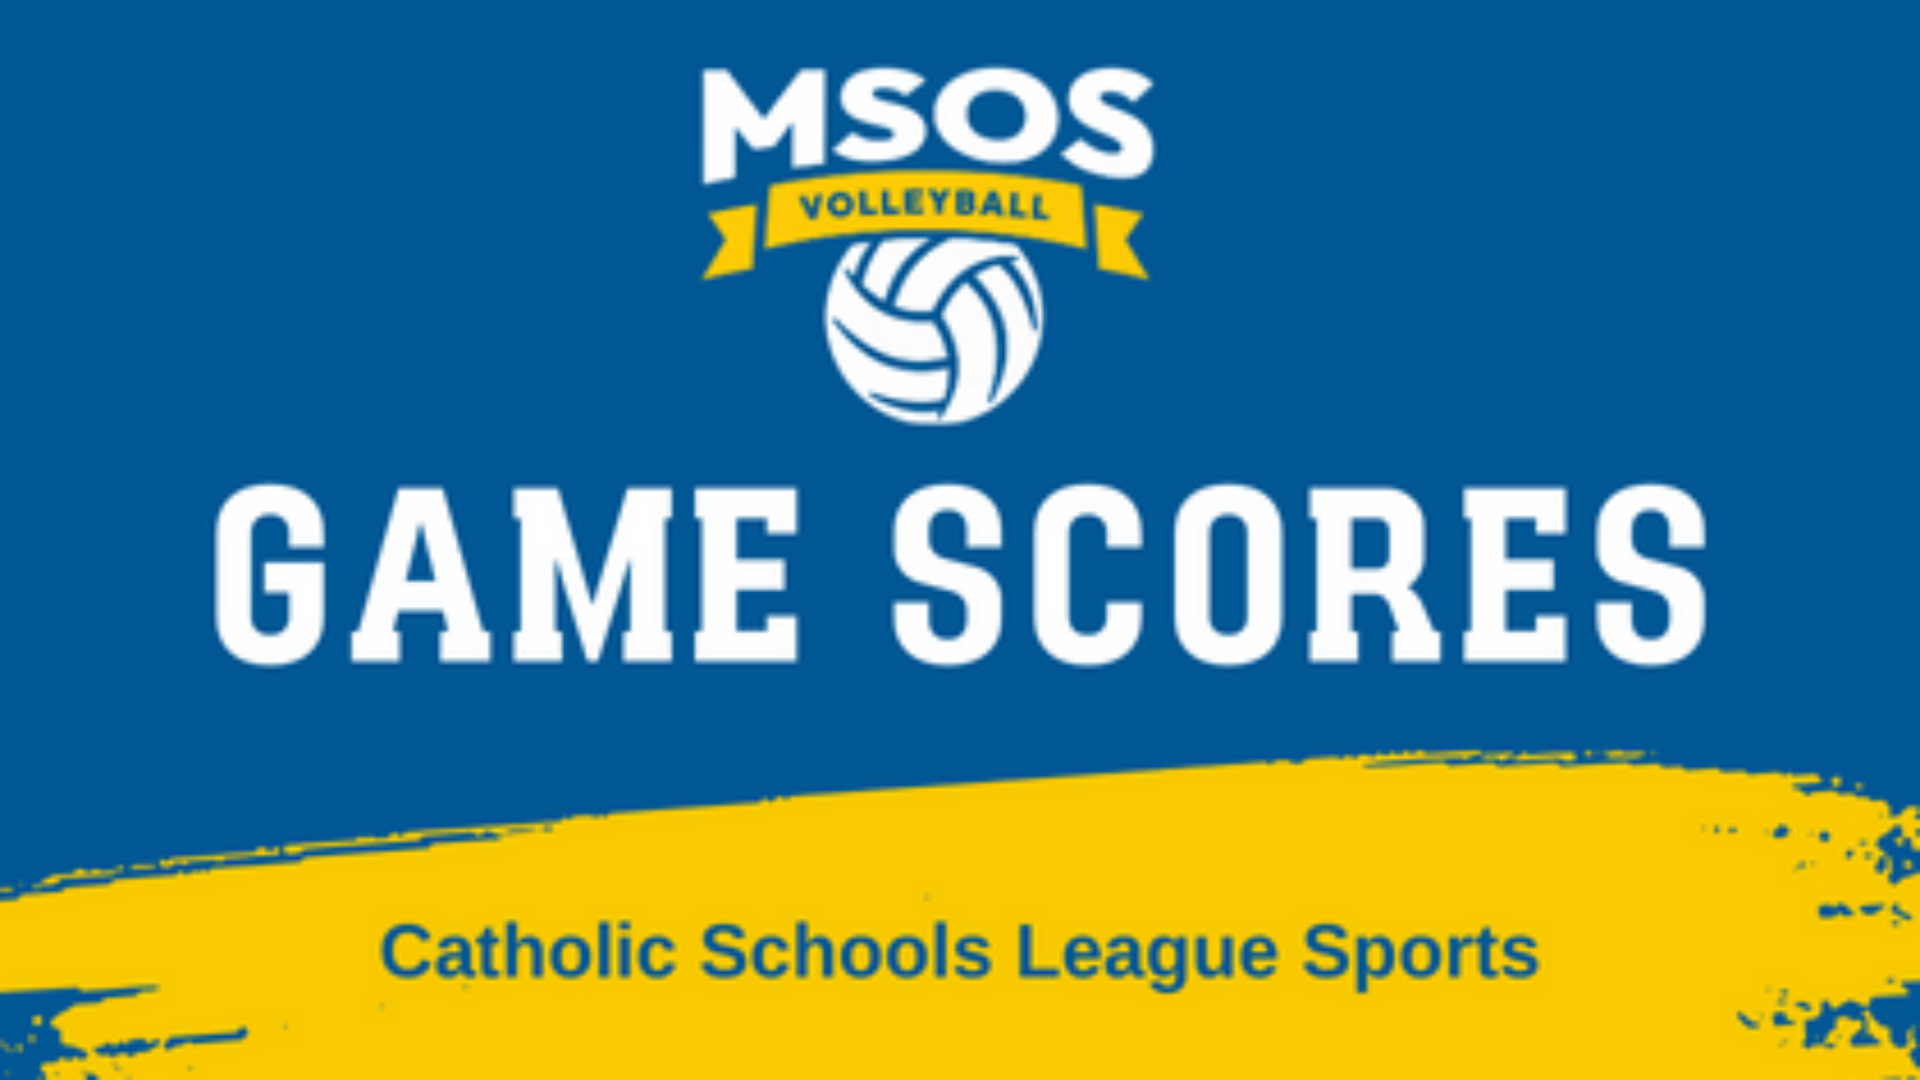 MSOS Volleyball Scores